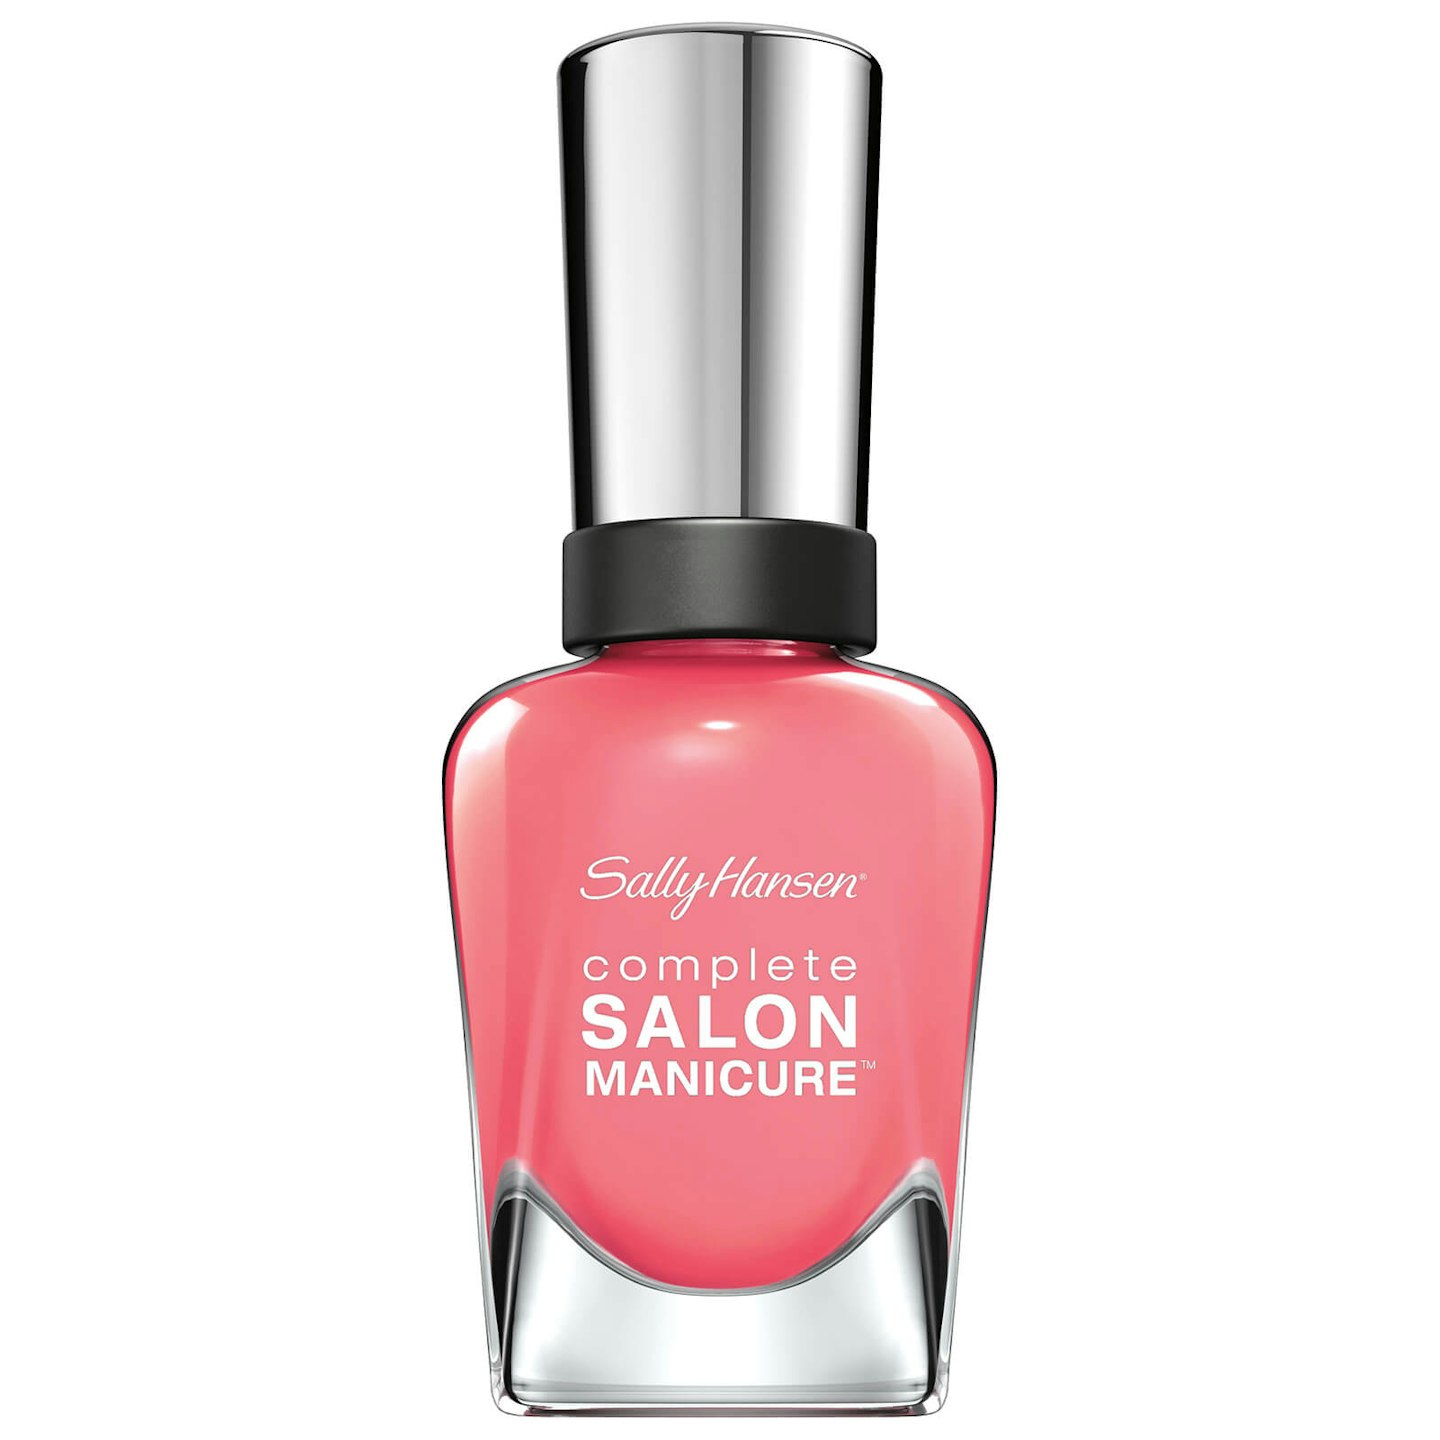 Sally Hansen Complete Salon Manicure Nail Polish in Get Juiced, £7.99